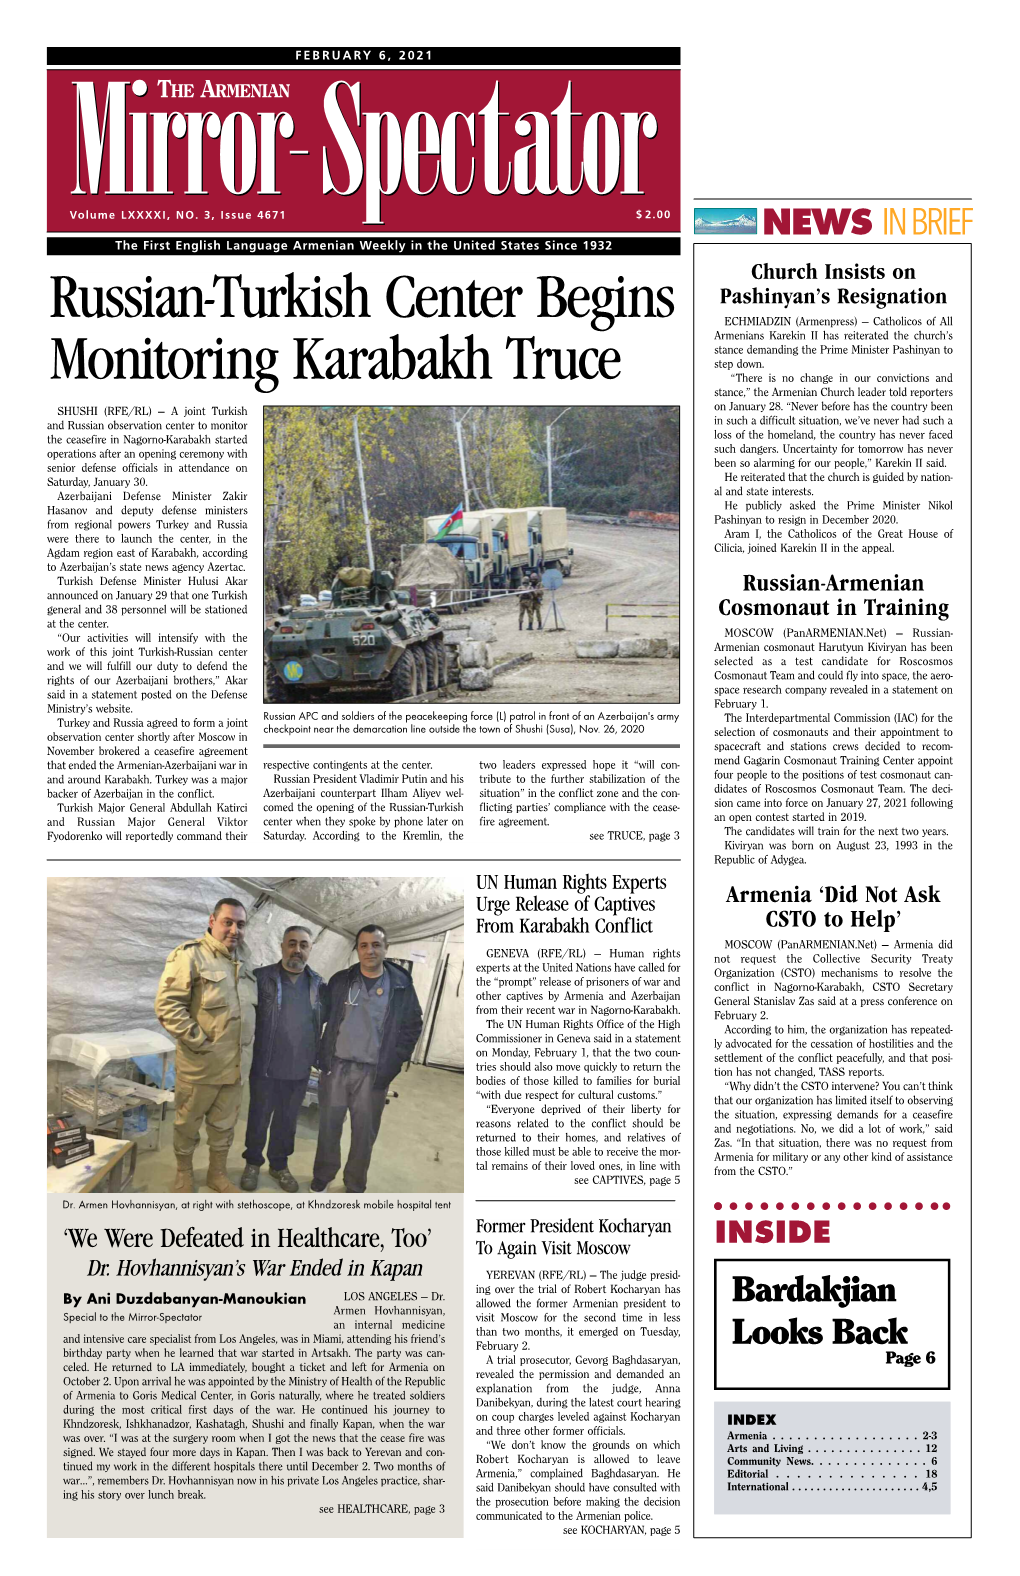 Russian-Turkish Center Begins Monitoring Karabakh Truce